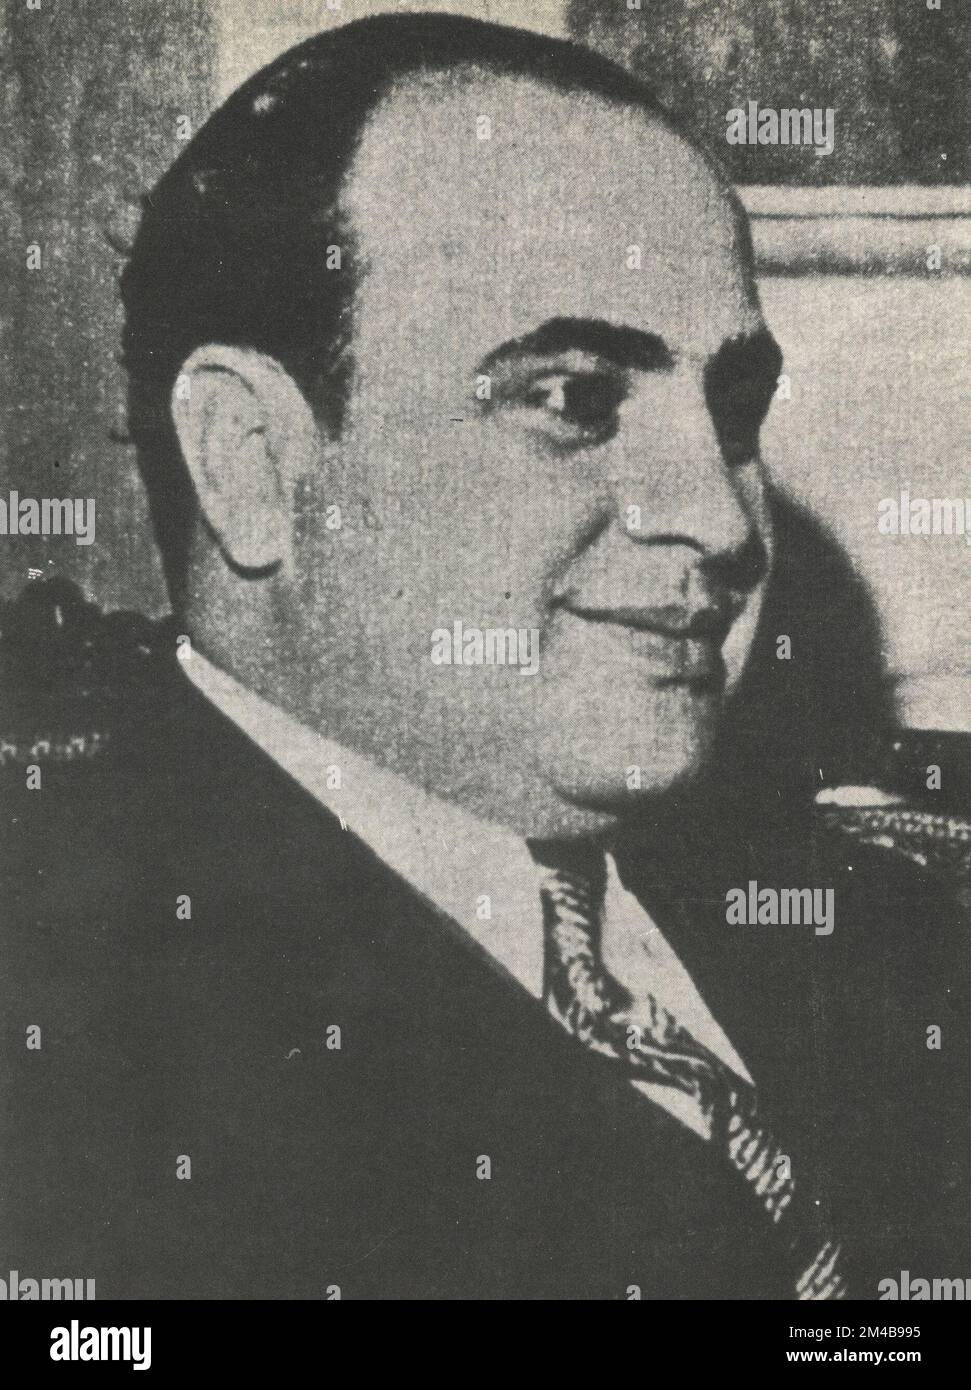 Portrait of American gangster Al Capone, USA 1930s Stock Photo